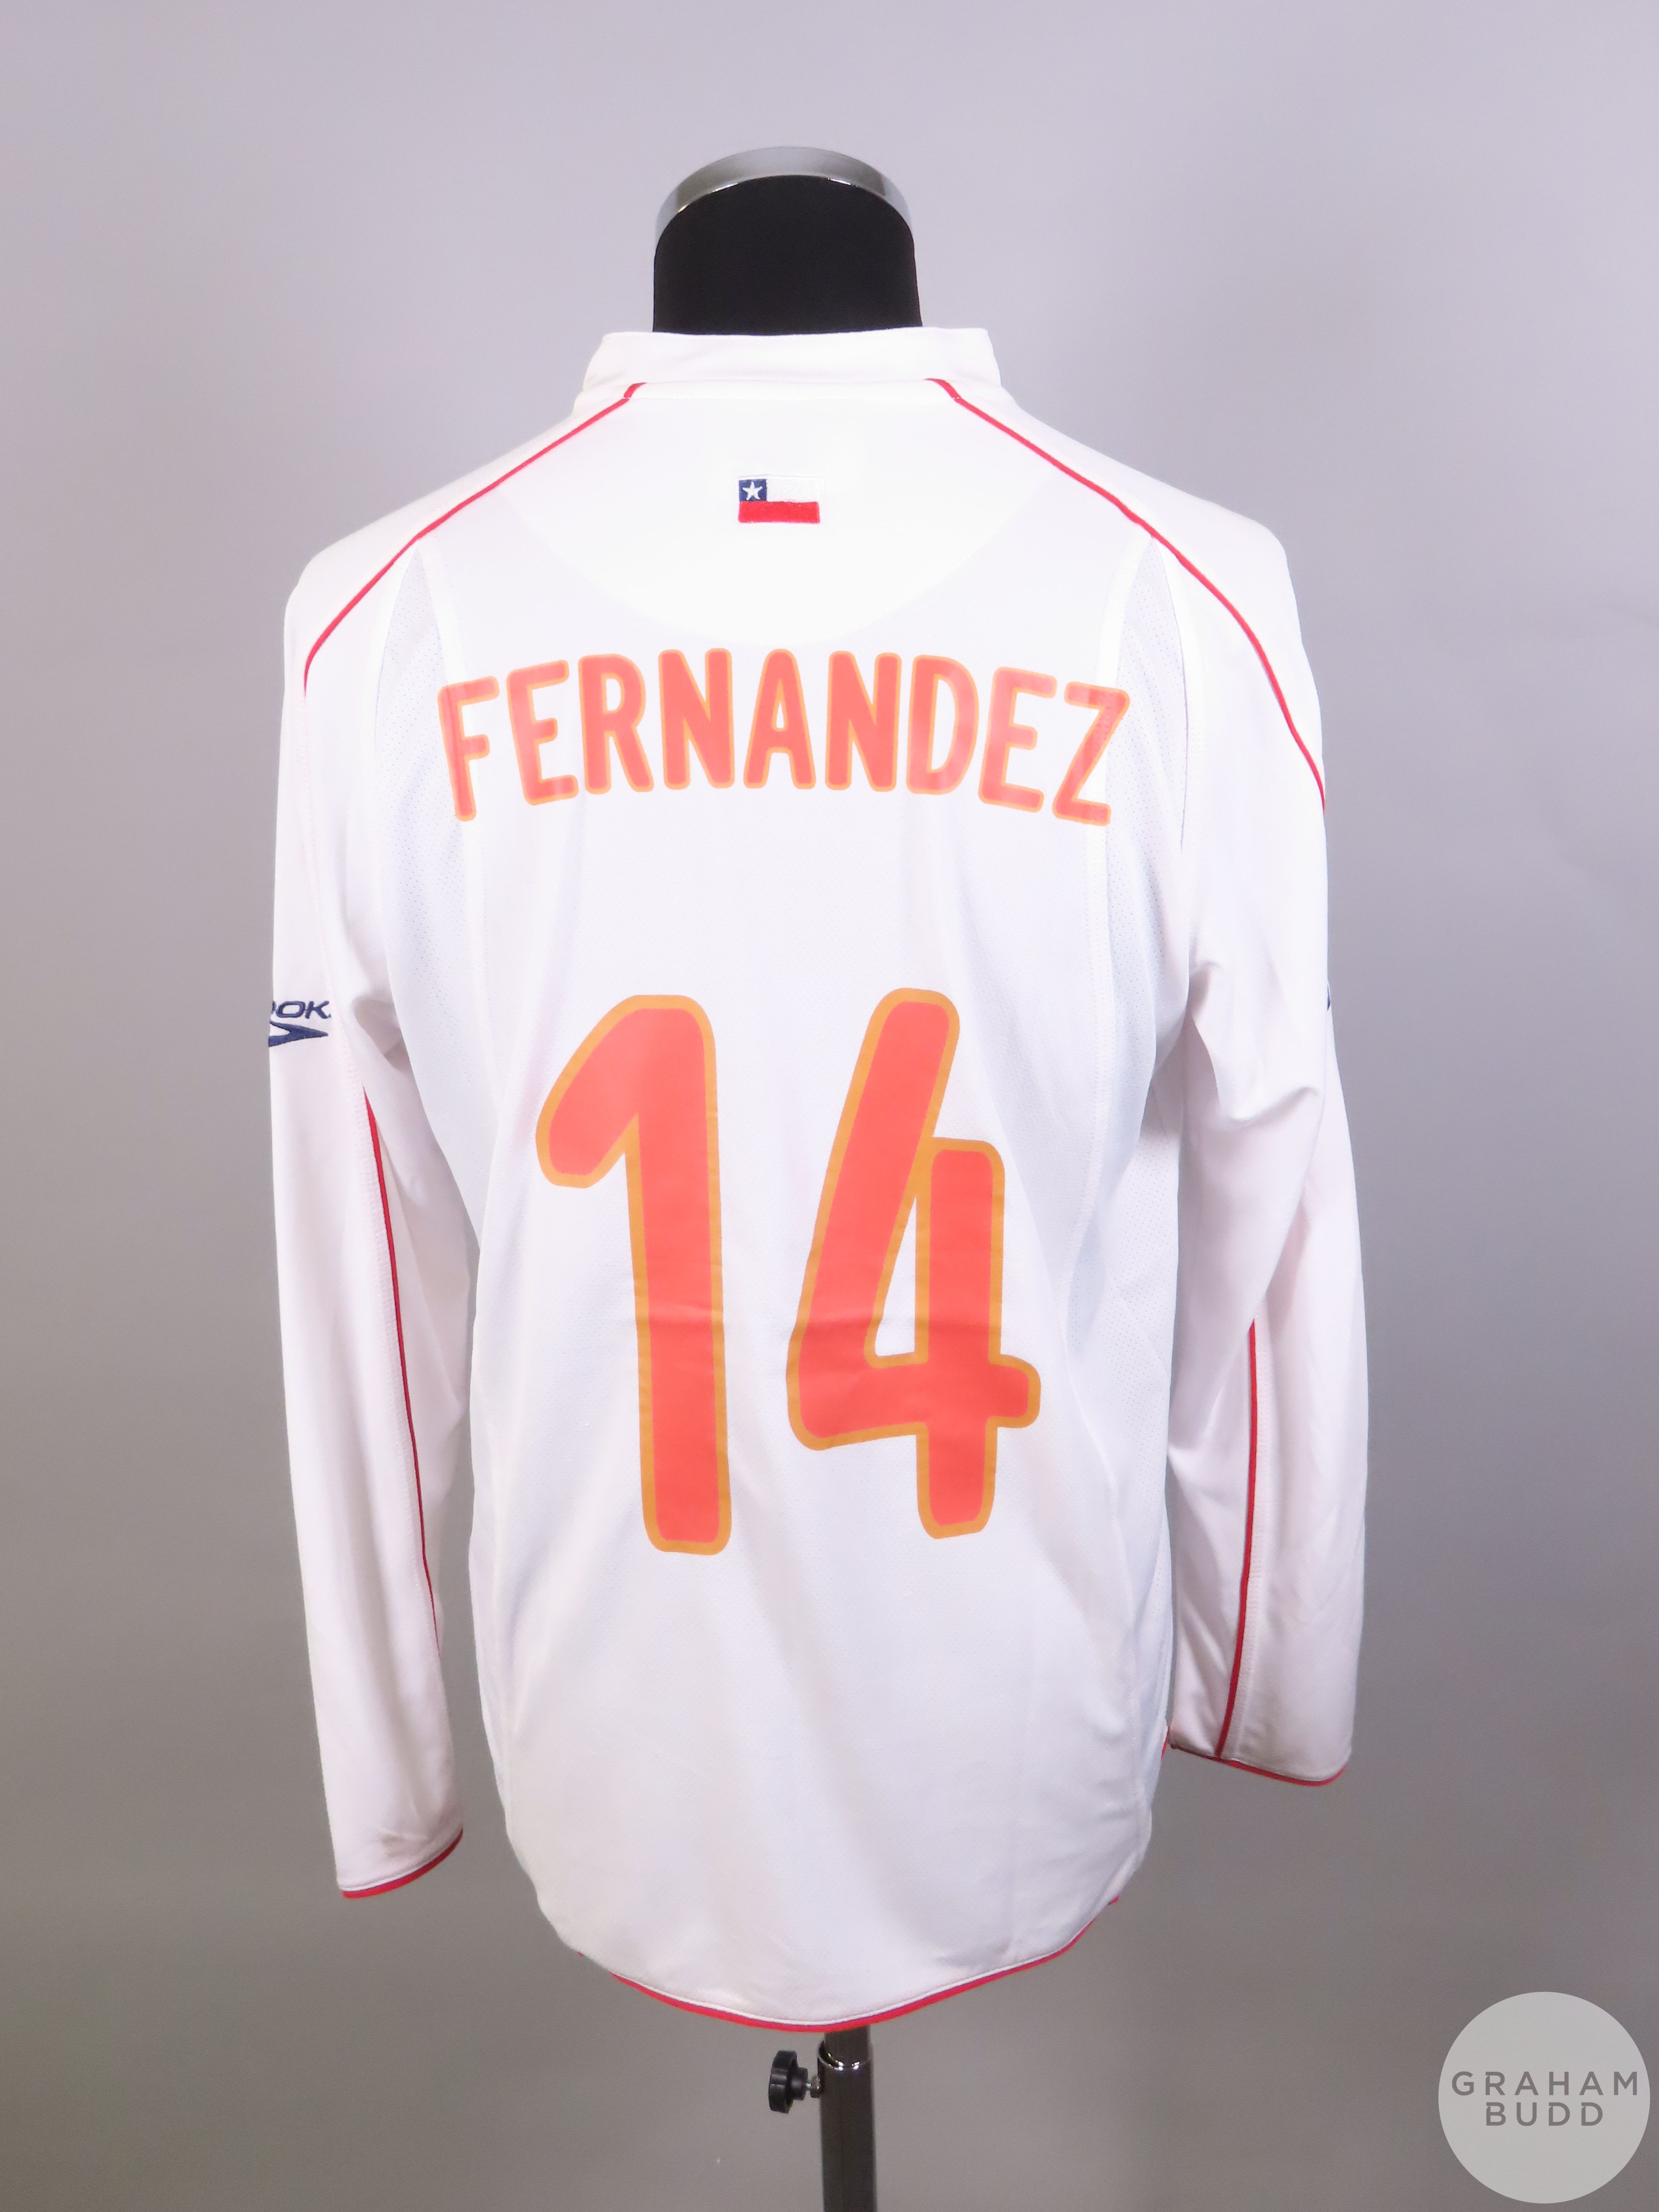 Matias Fernandez white Chile No.14 away shirt, 2010, - Image 2 of 2